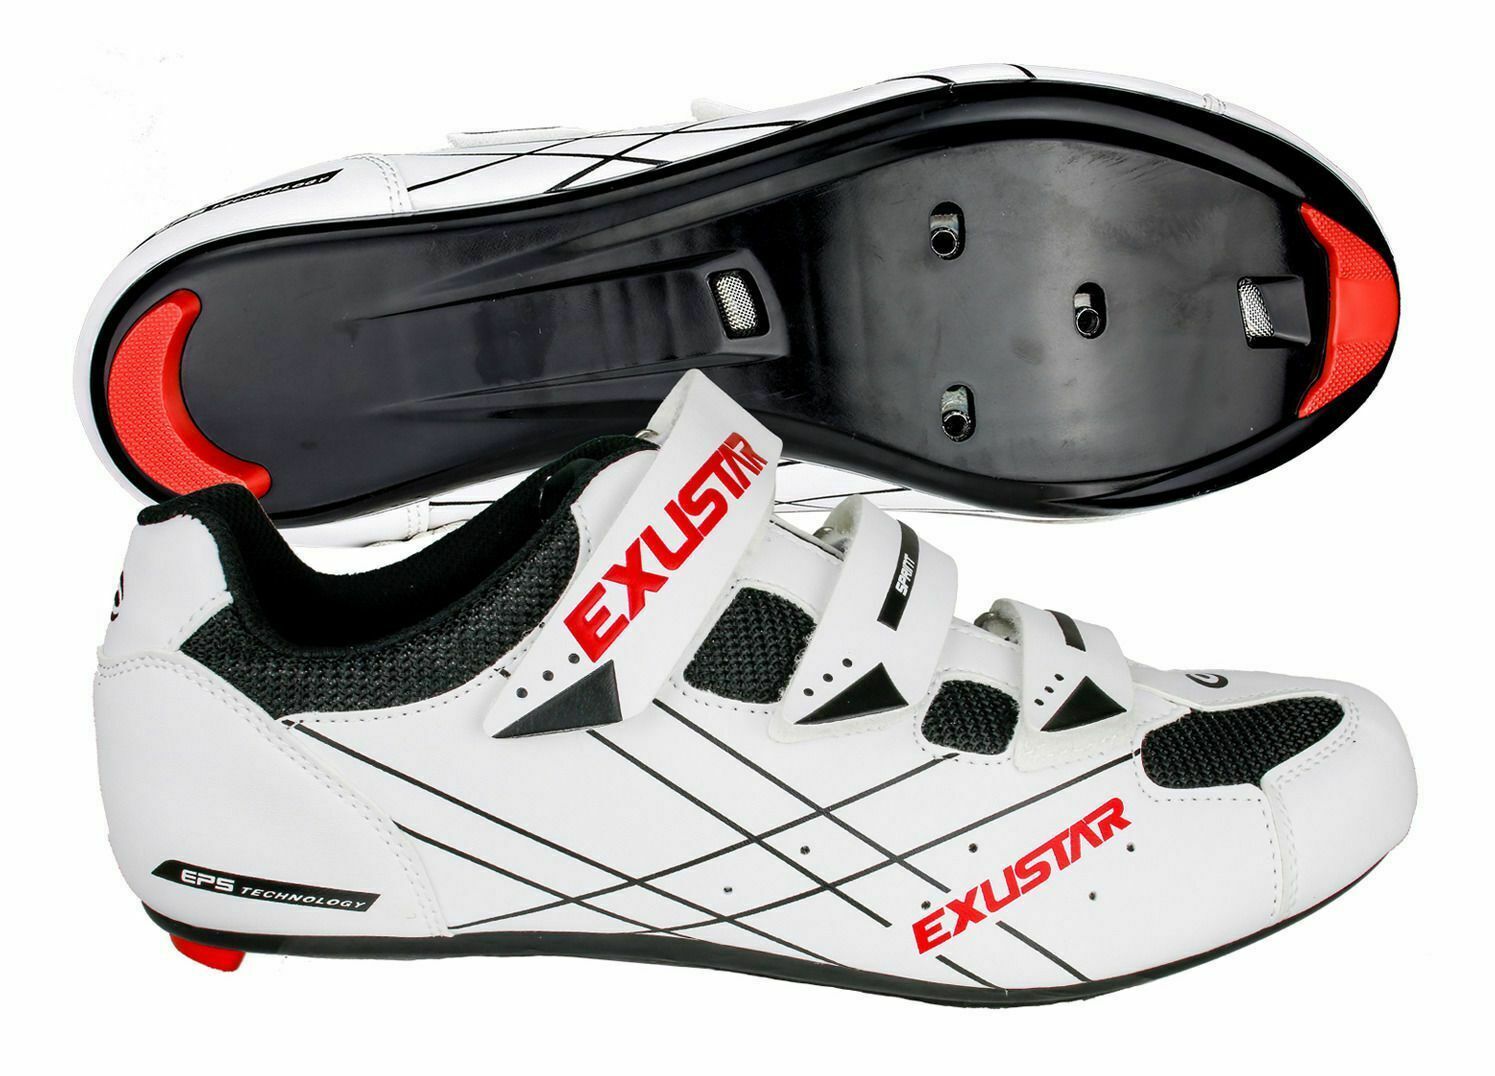 E-SR493 Road Bike Shoes Size 40